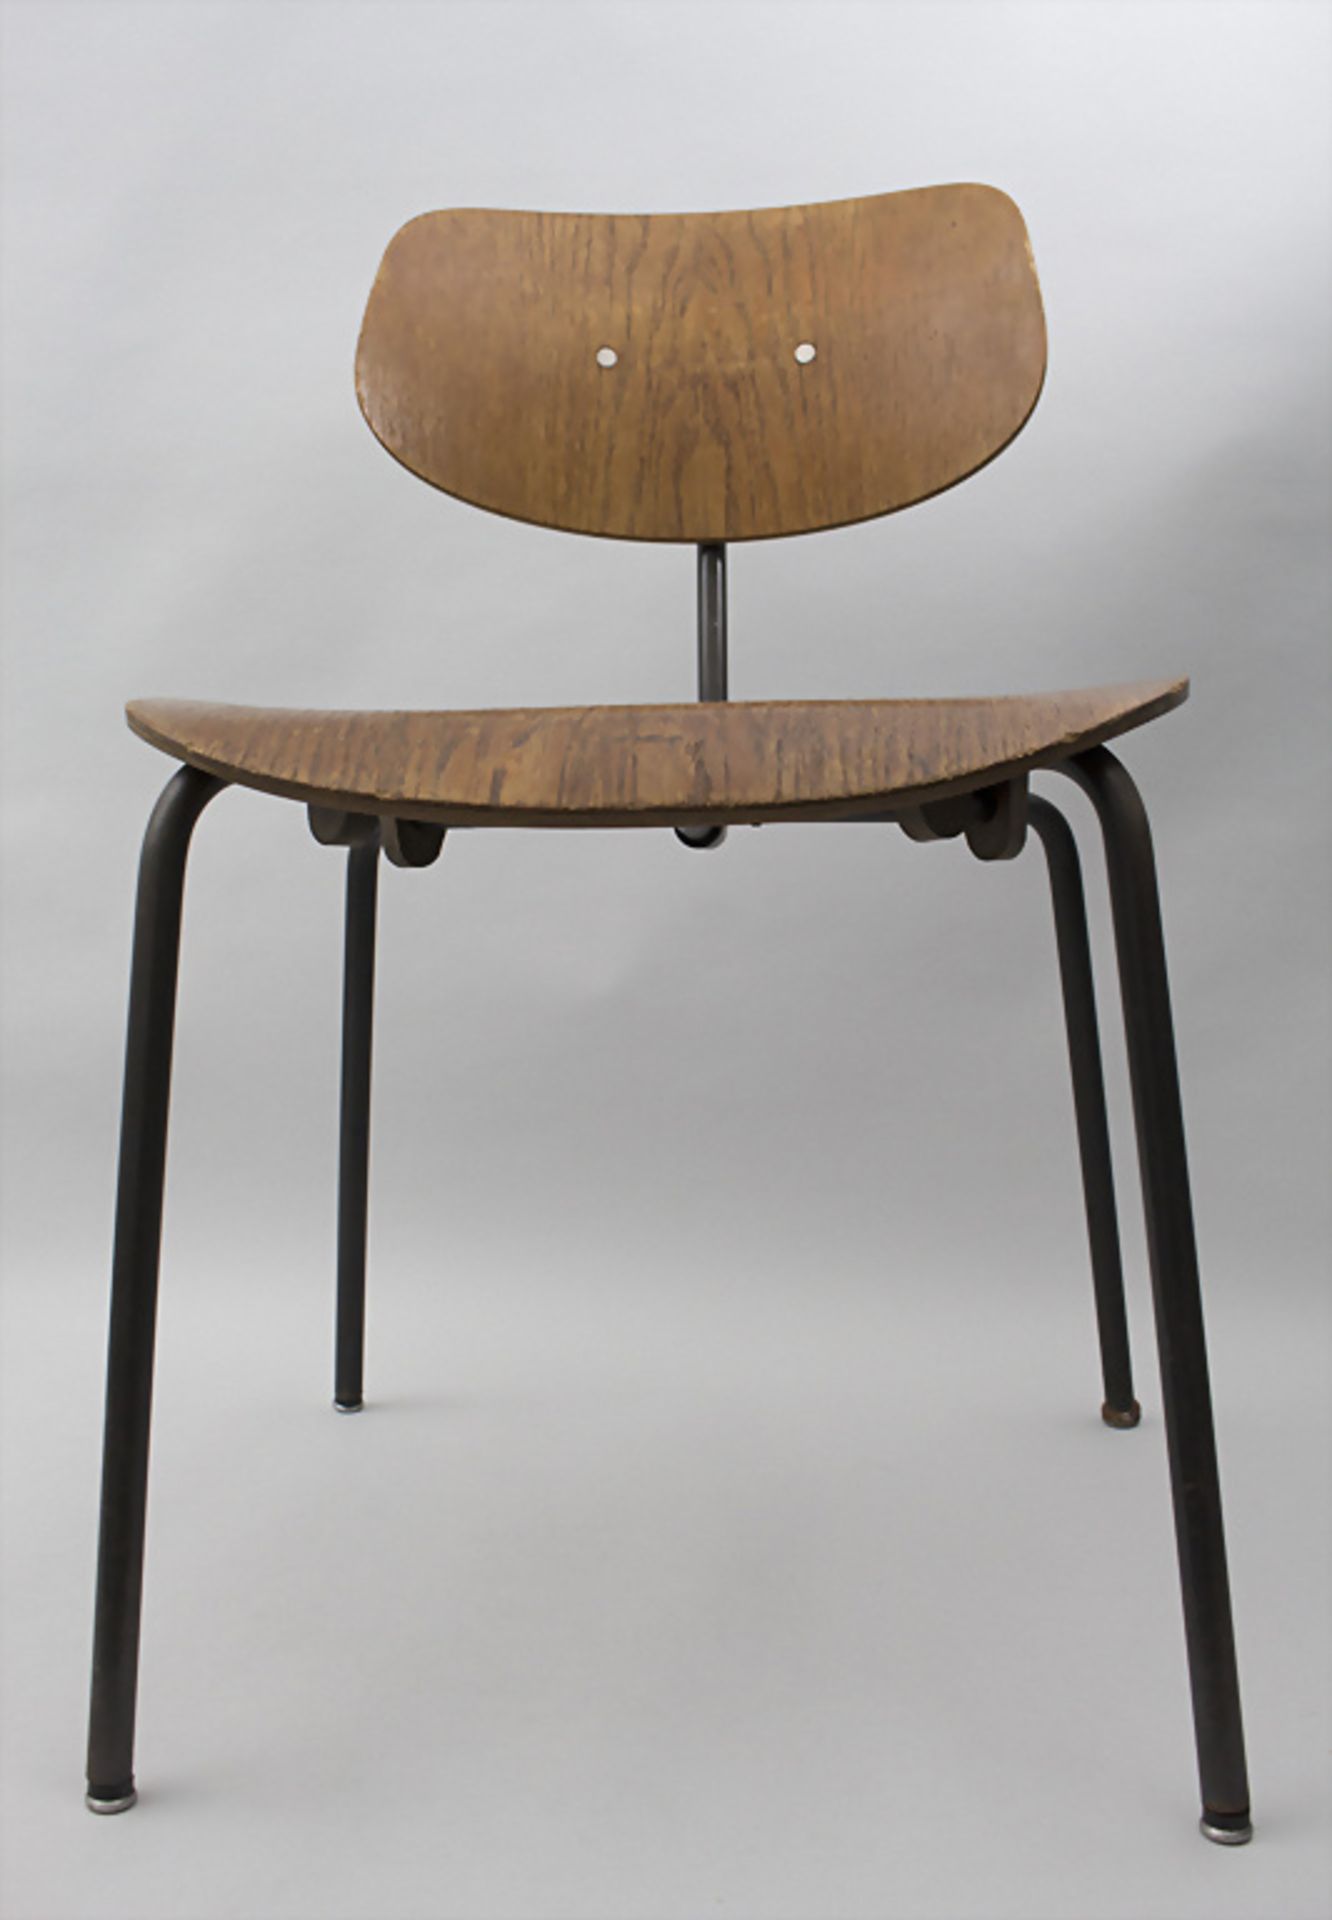 Stuhl / A chair, nach Entwurf Egon Eiermann, um 1950 - Image 2 of 5